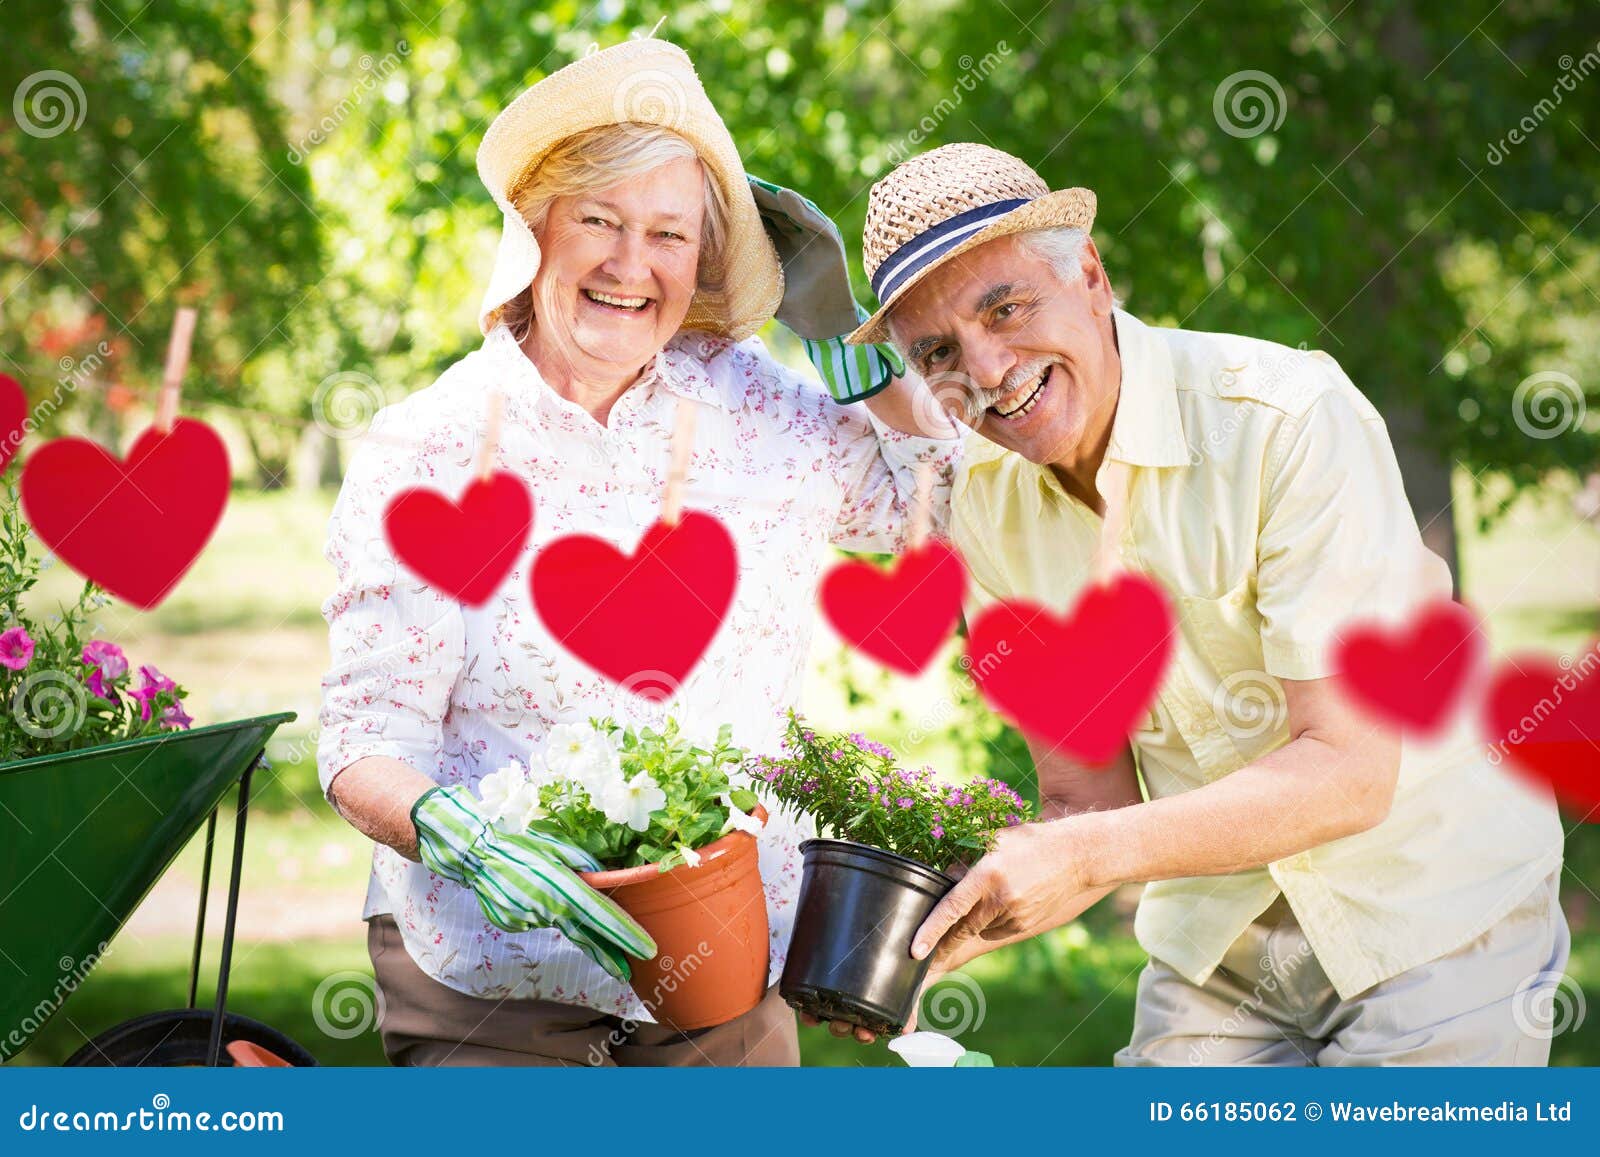 Composite Image of Happy Senior Couple Gardening Stock Photo - Image of ...